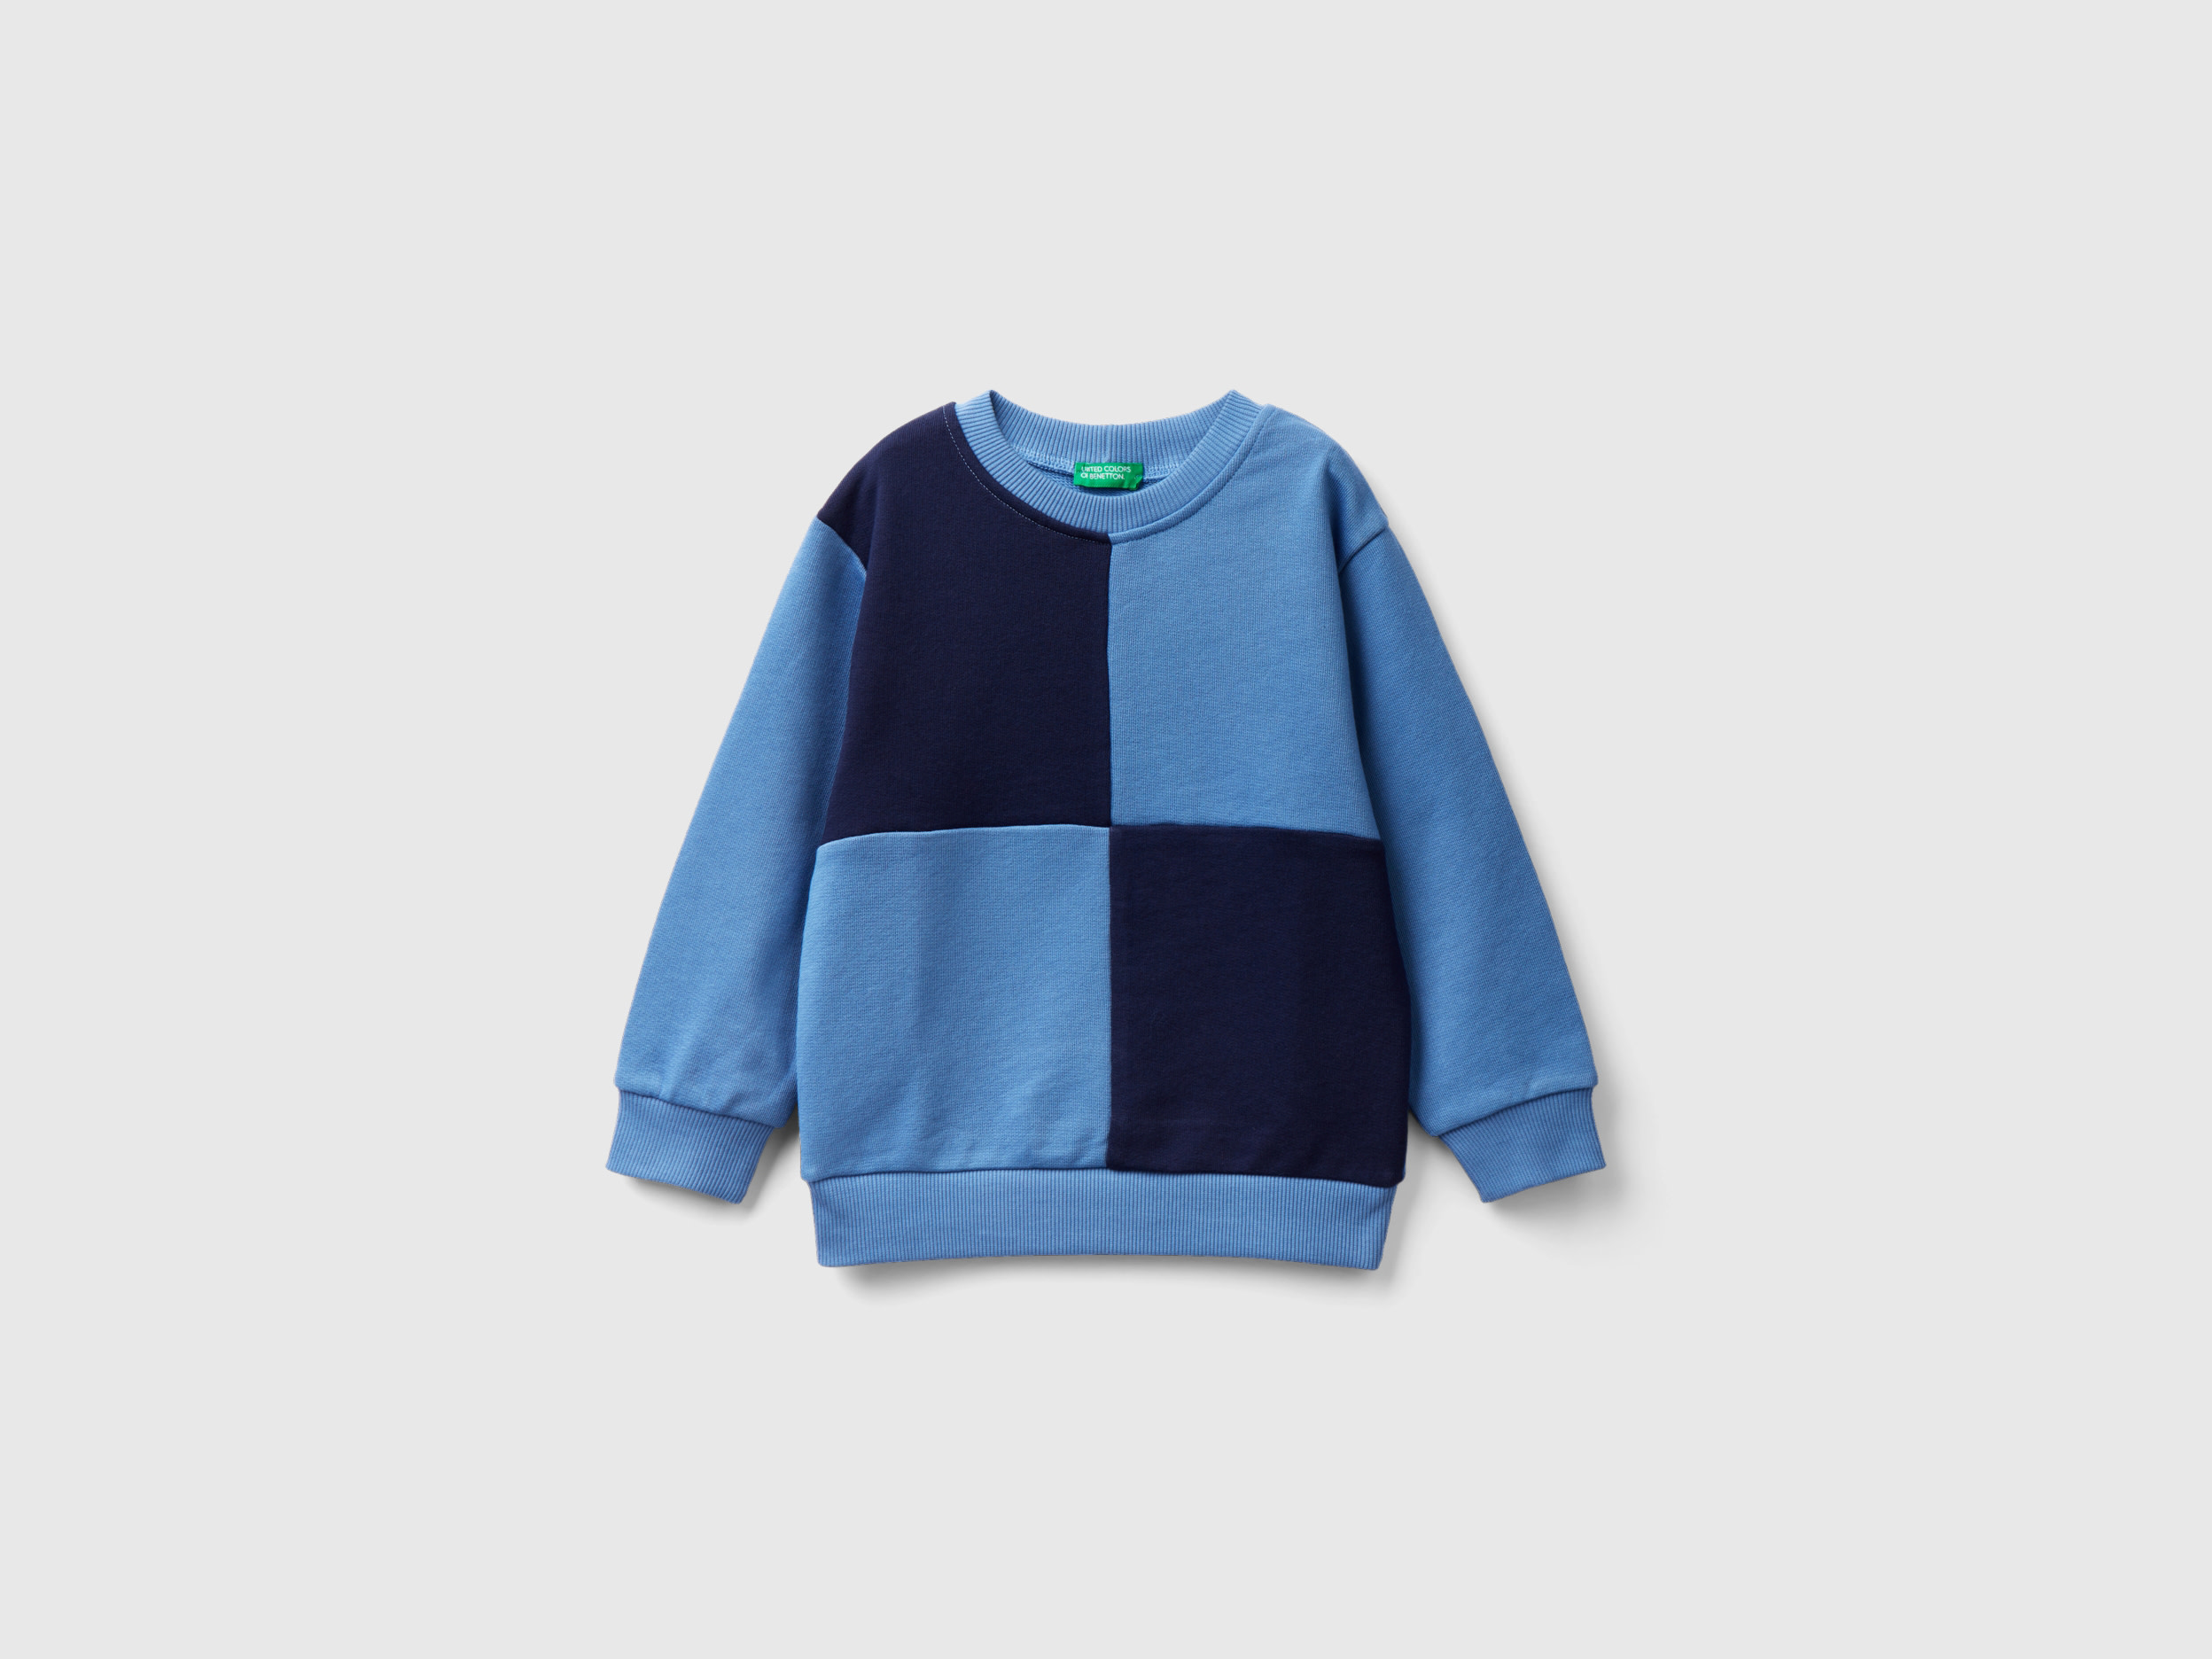 Benetton, Sweatshirt With Maxi Check, size 3-4, Light Blue, Kids